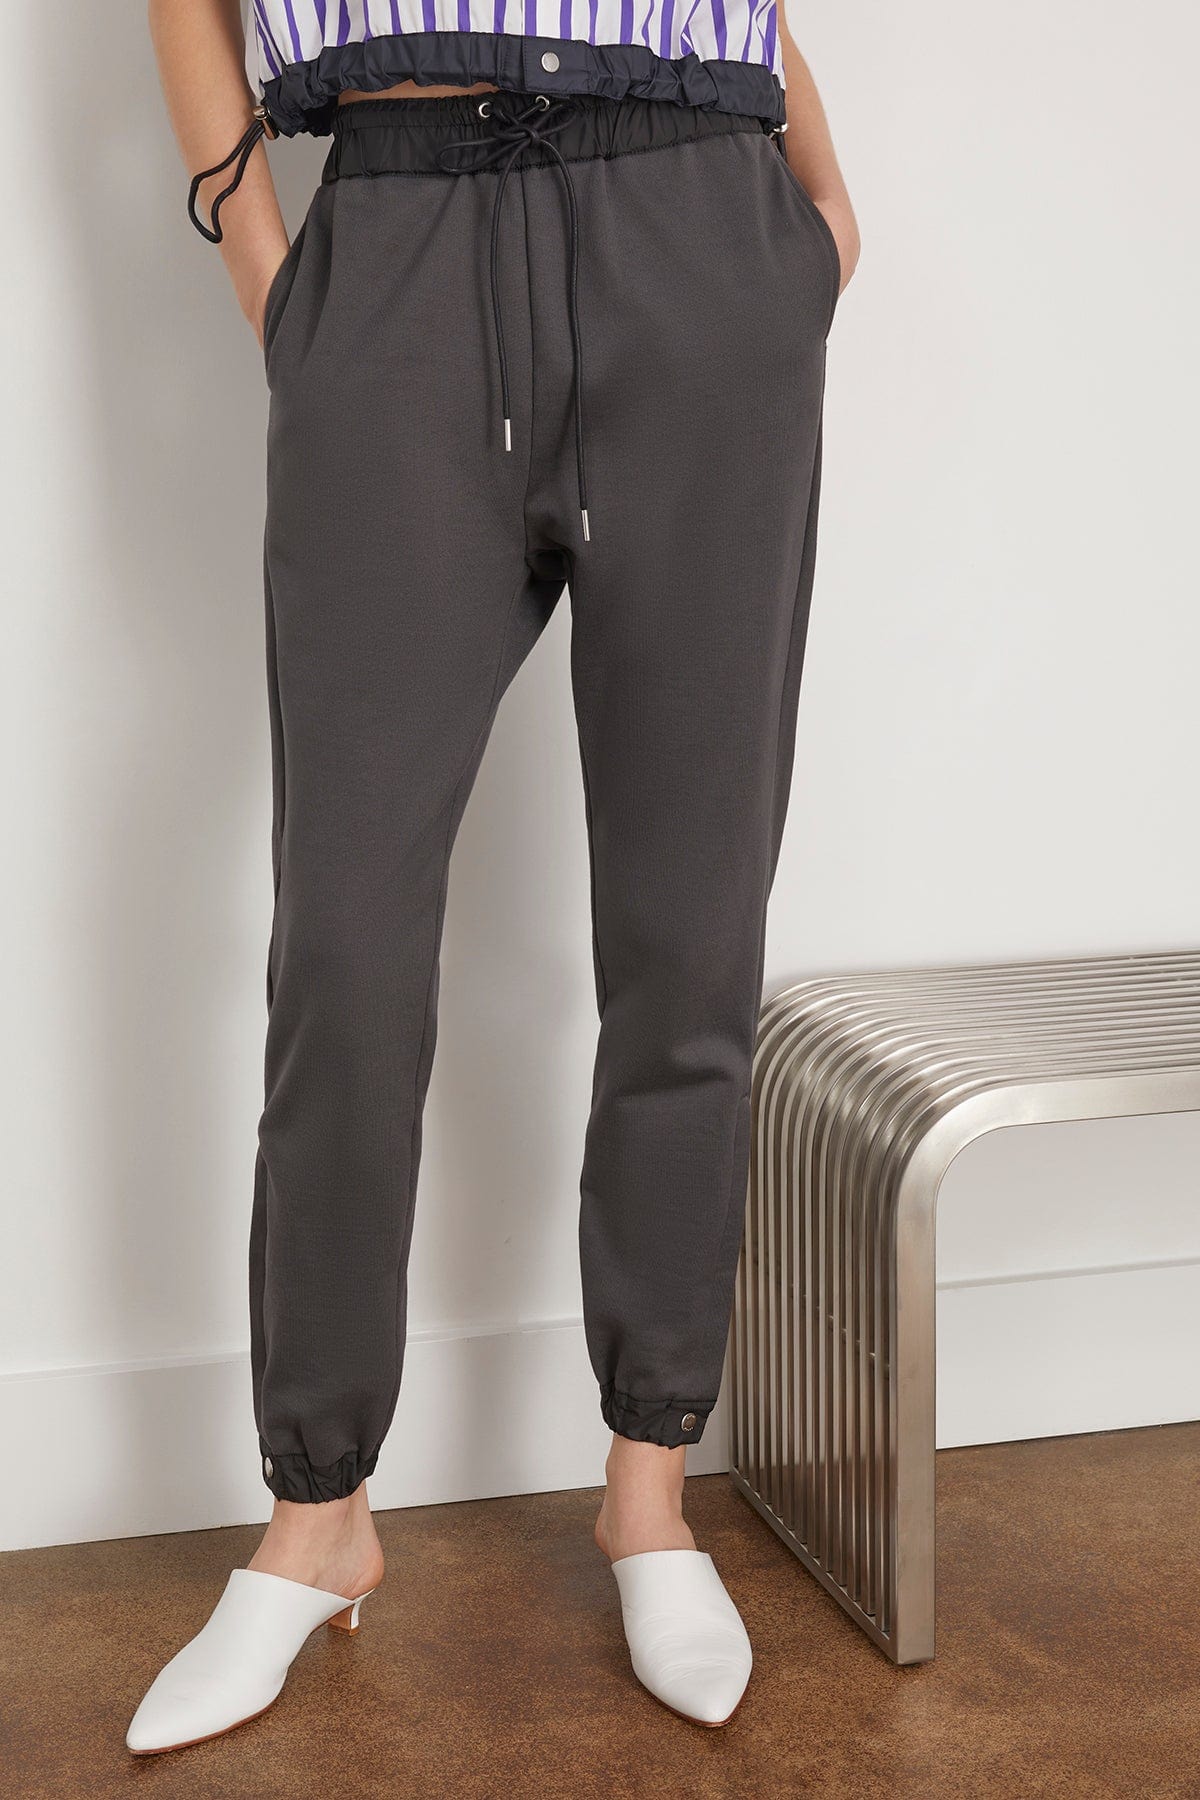 Sacai Pants Sweat Jersey Pants in Charcoal Gray Sacai Sweat Jersey Pants in Charcoal Gray